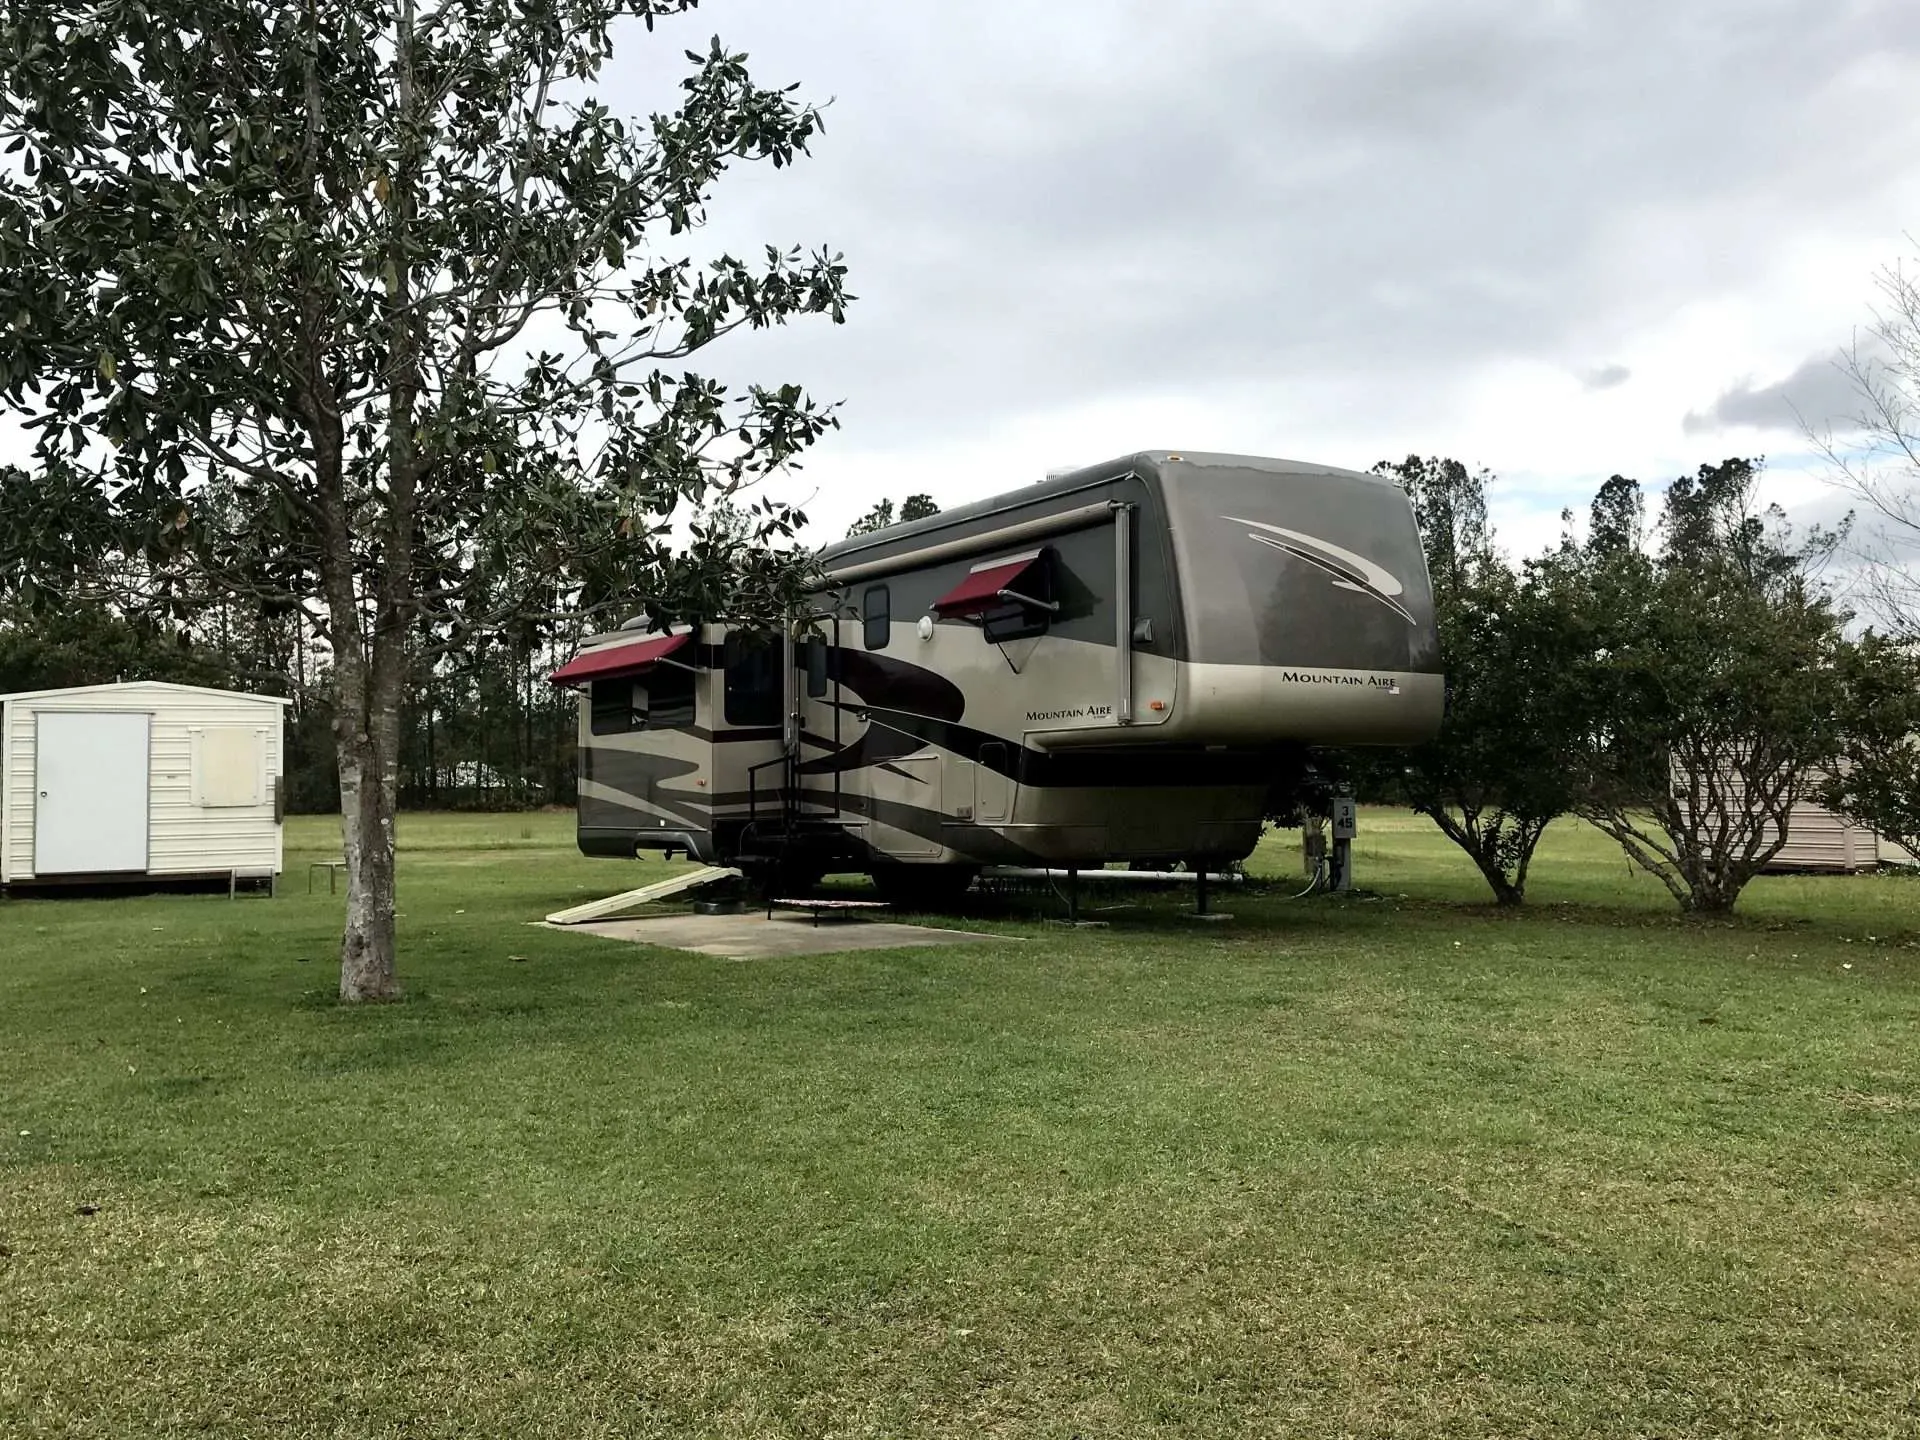 RV parked at year-round campground.